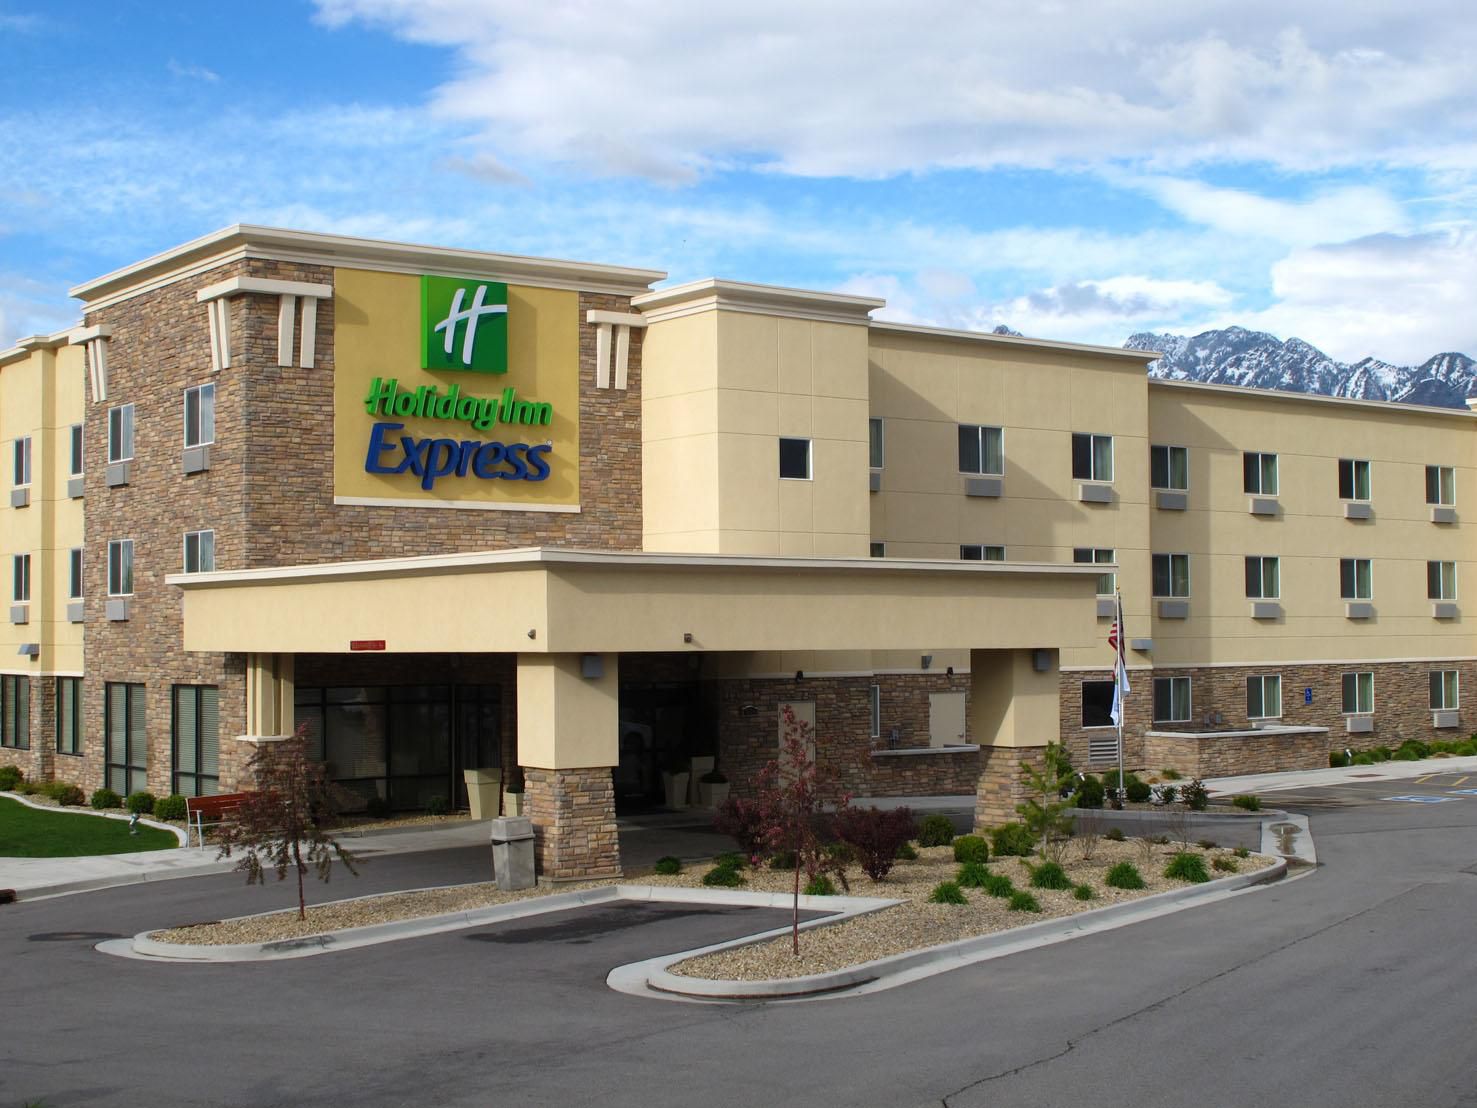 Find Salt Lake City Hotels Top 18 Hotels In Salt Lake City Ut